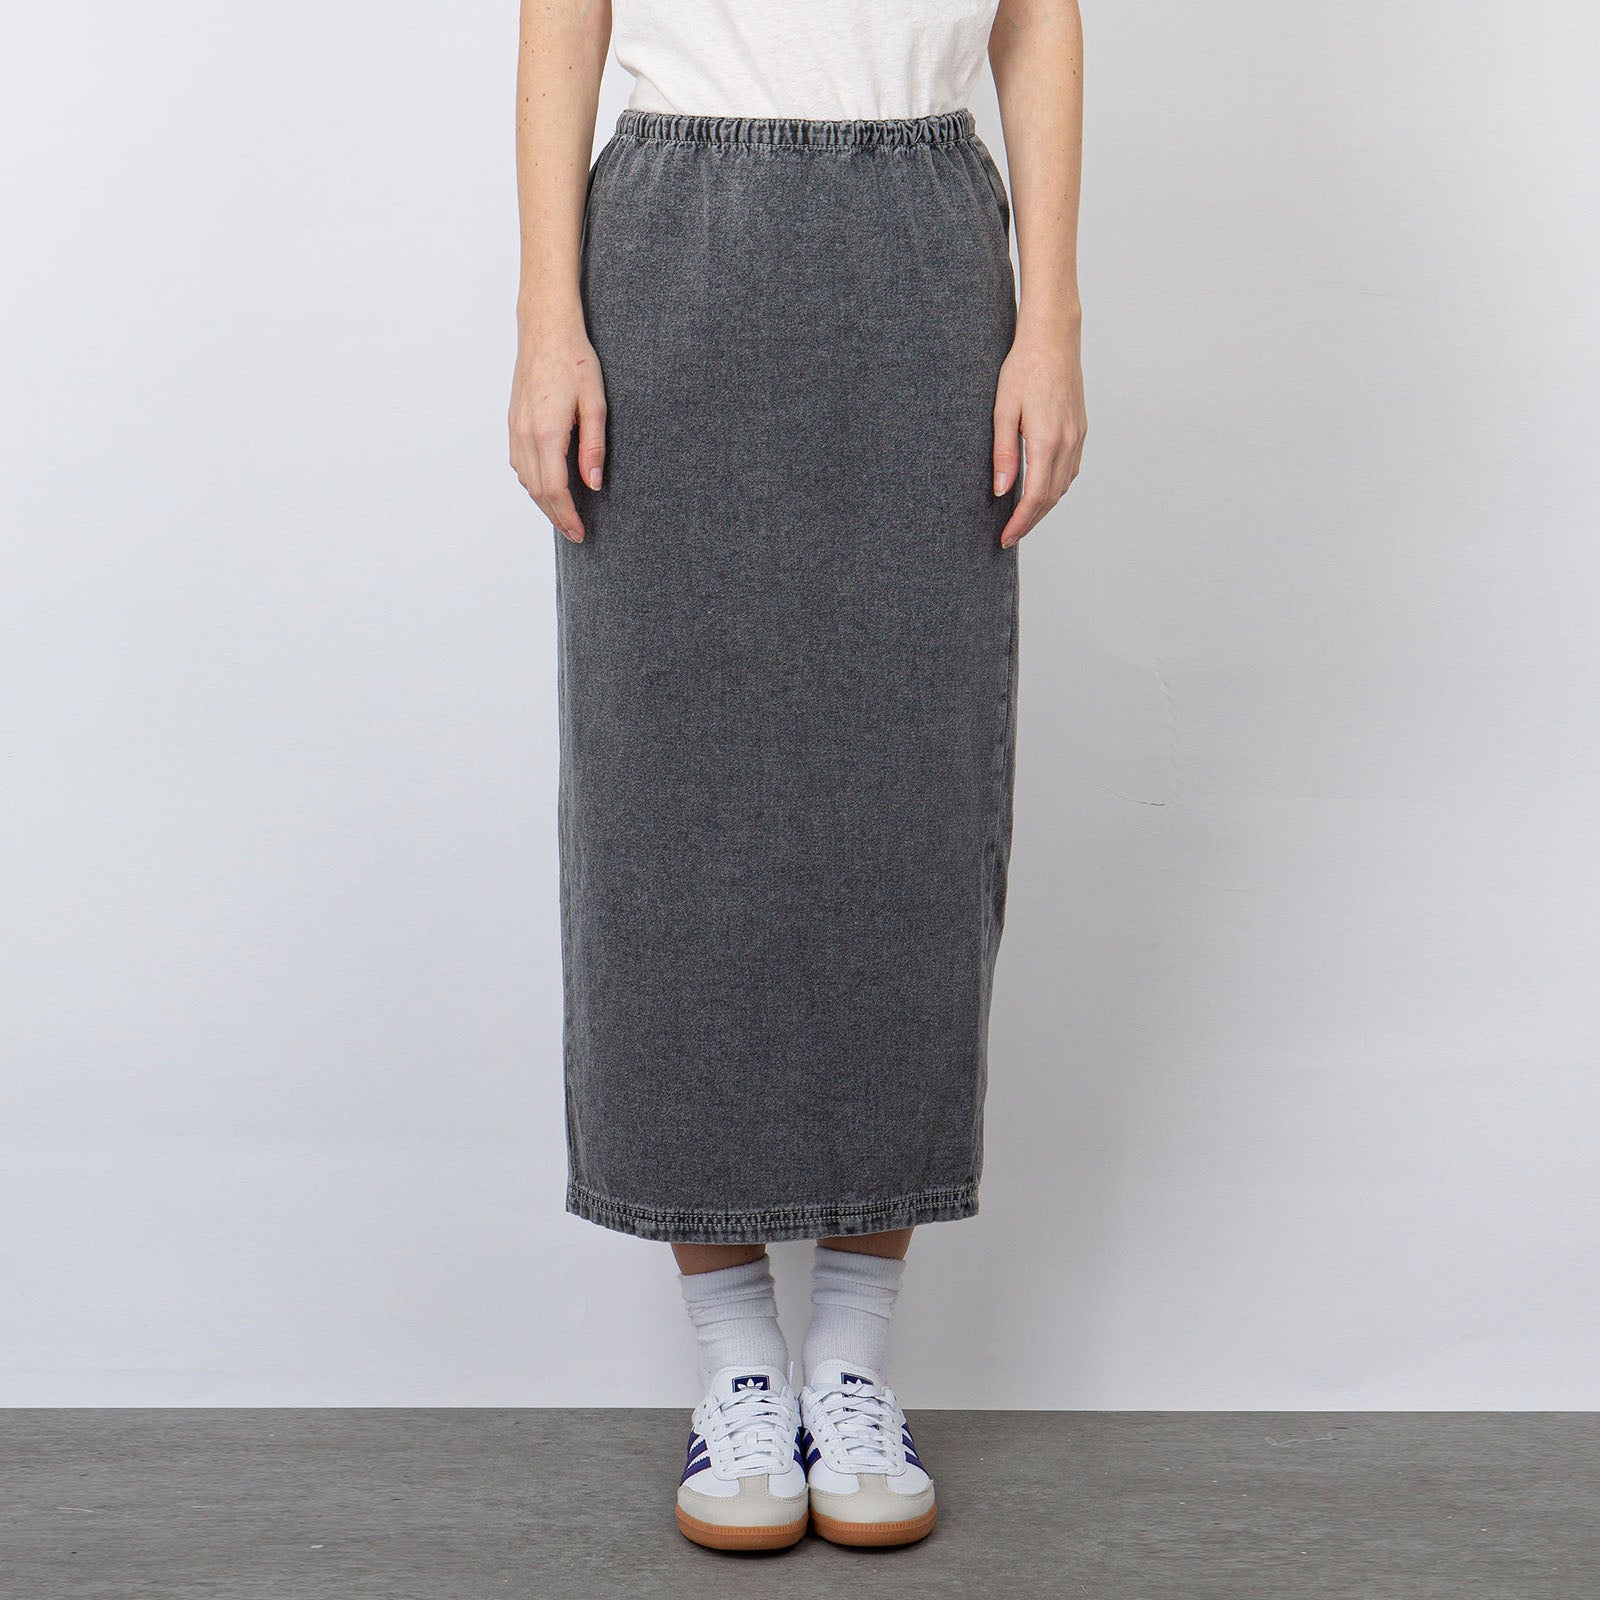 American Vintage Jazy Denim Skirt Grey - 7